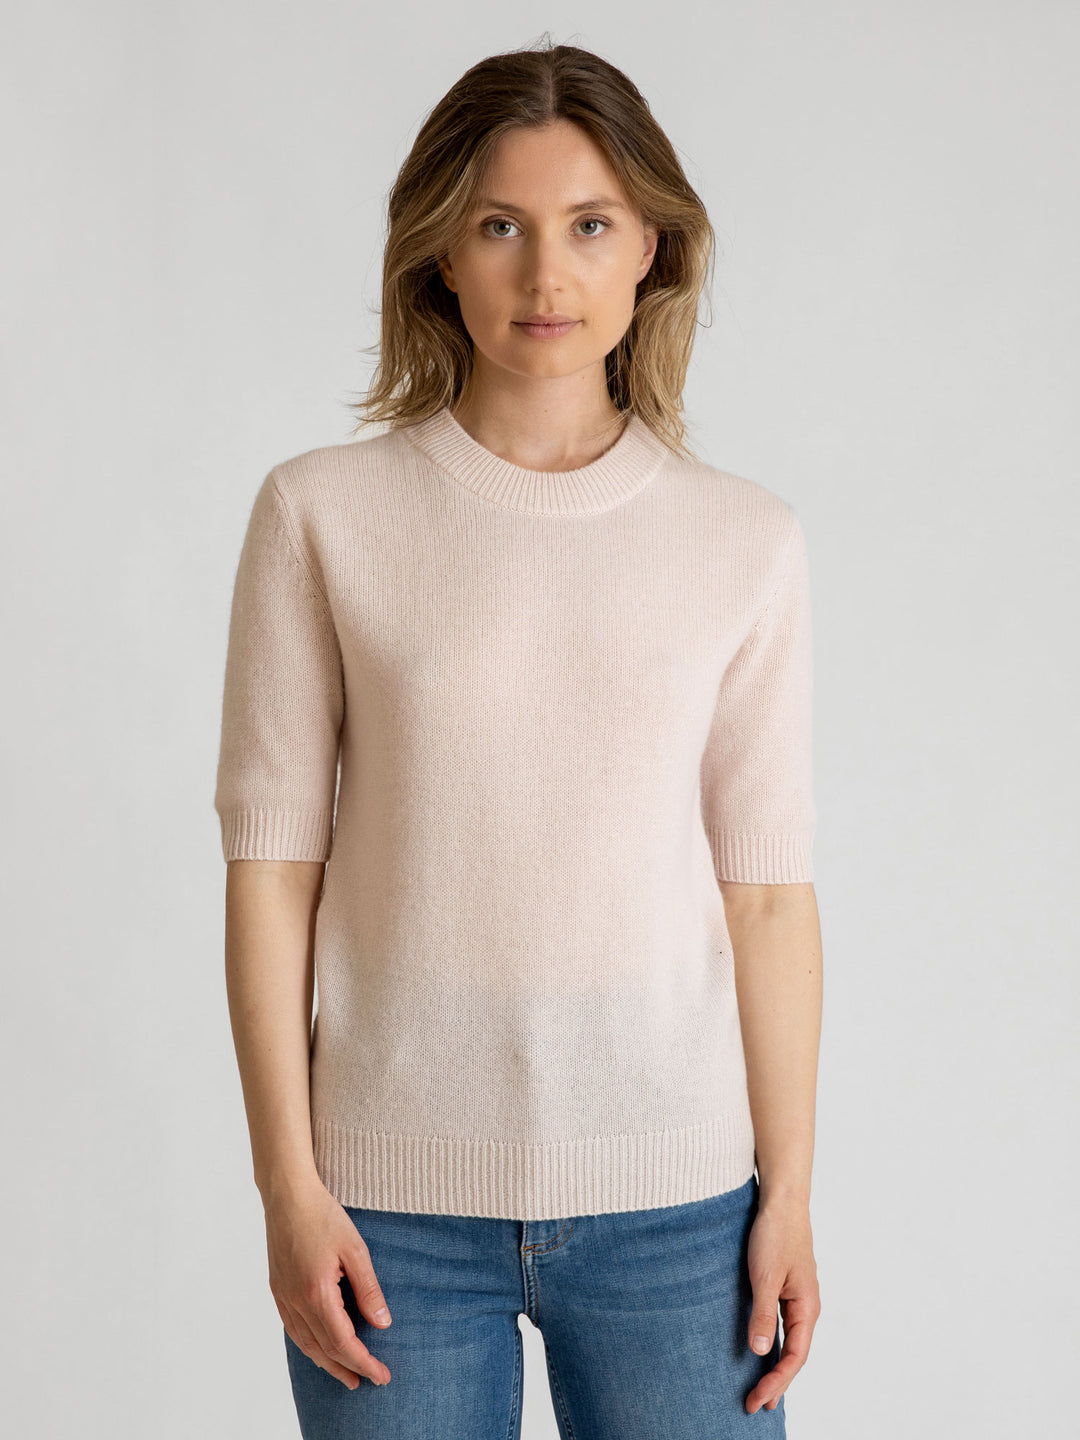 Cashmere sweater "Sofia" short sleeve, 100% cashmere, Norwegian design from Kashmina